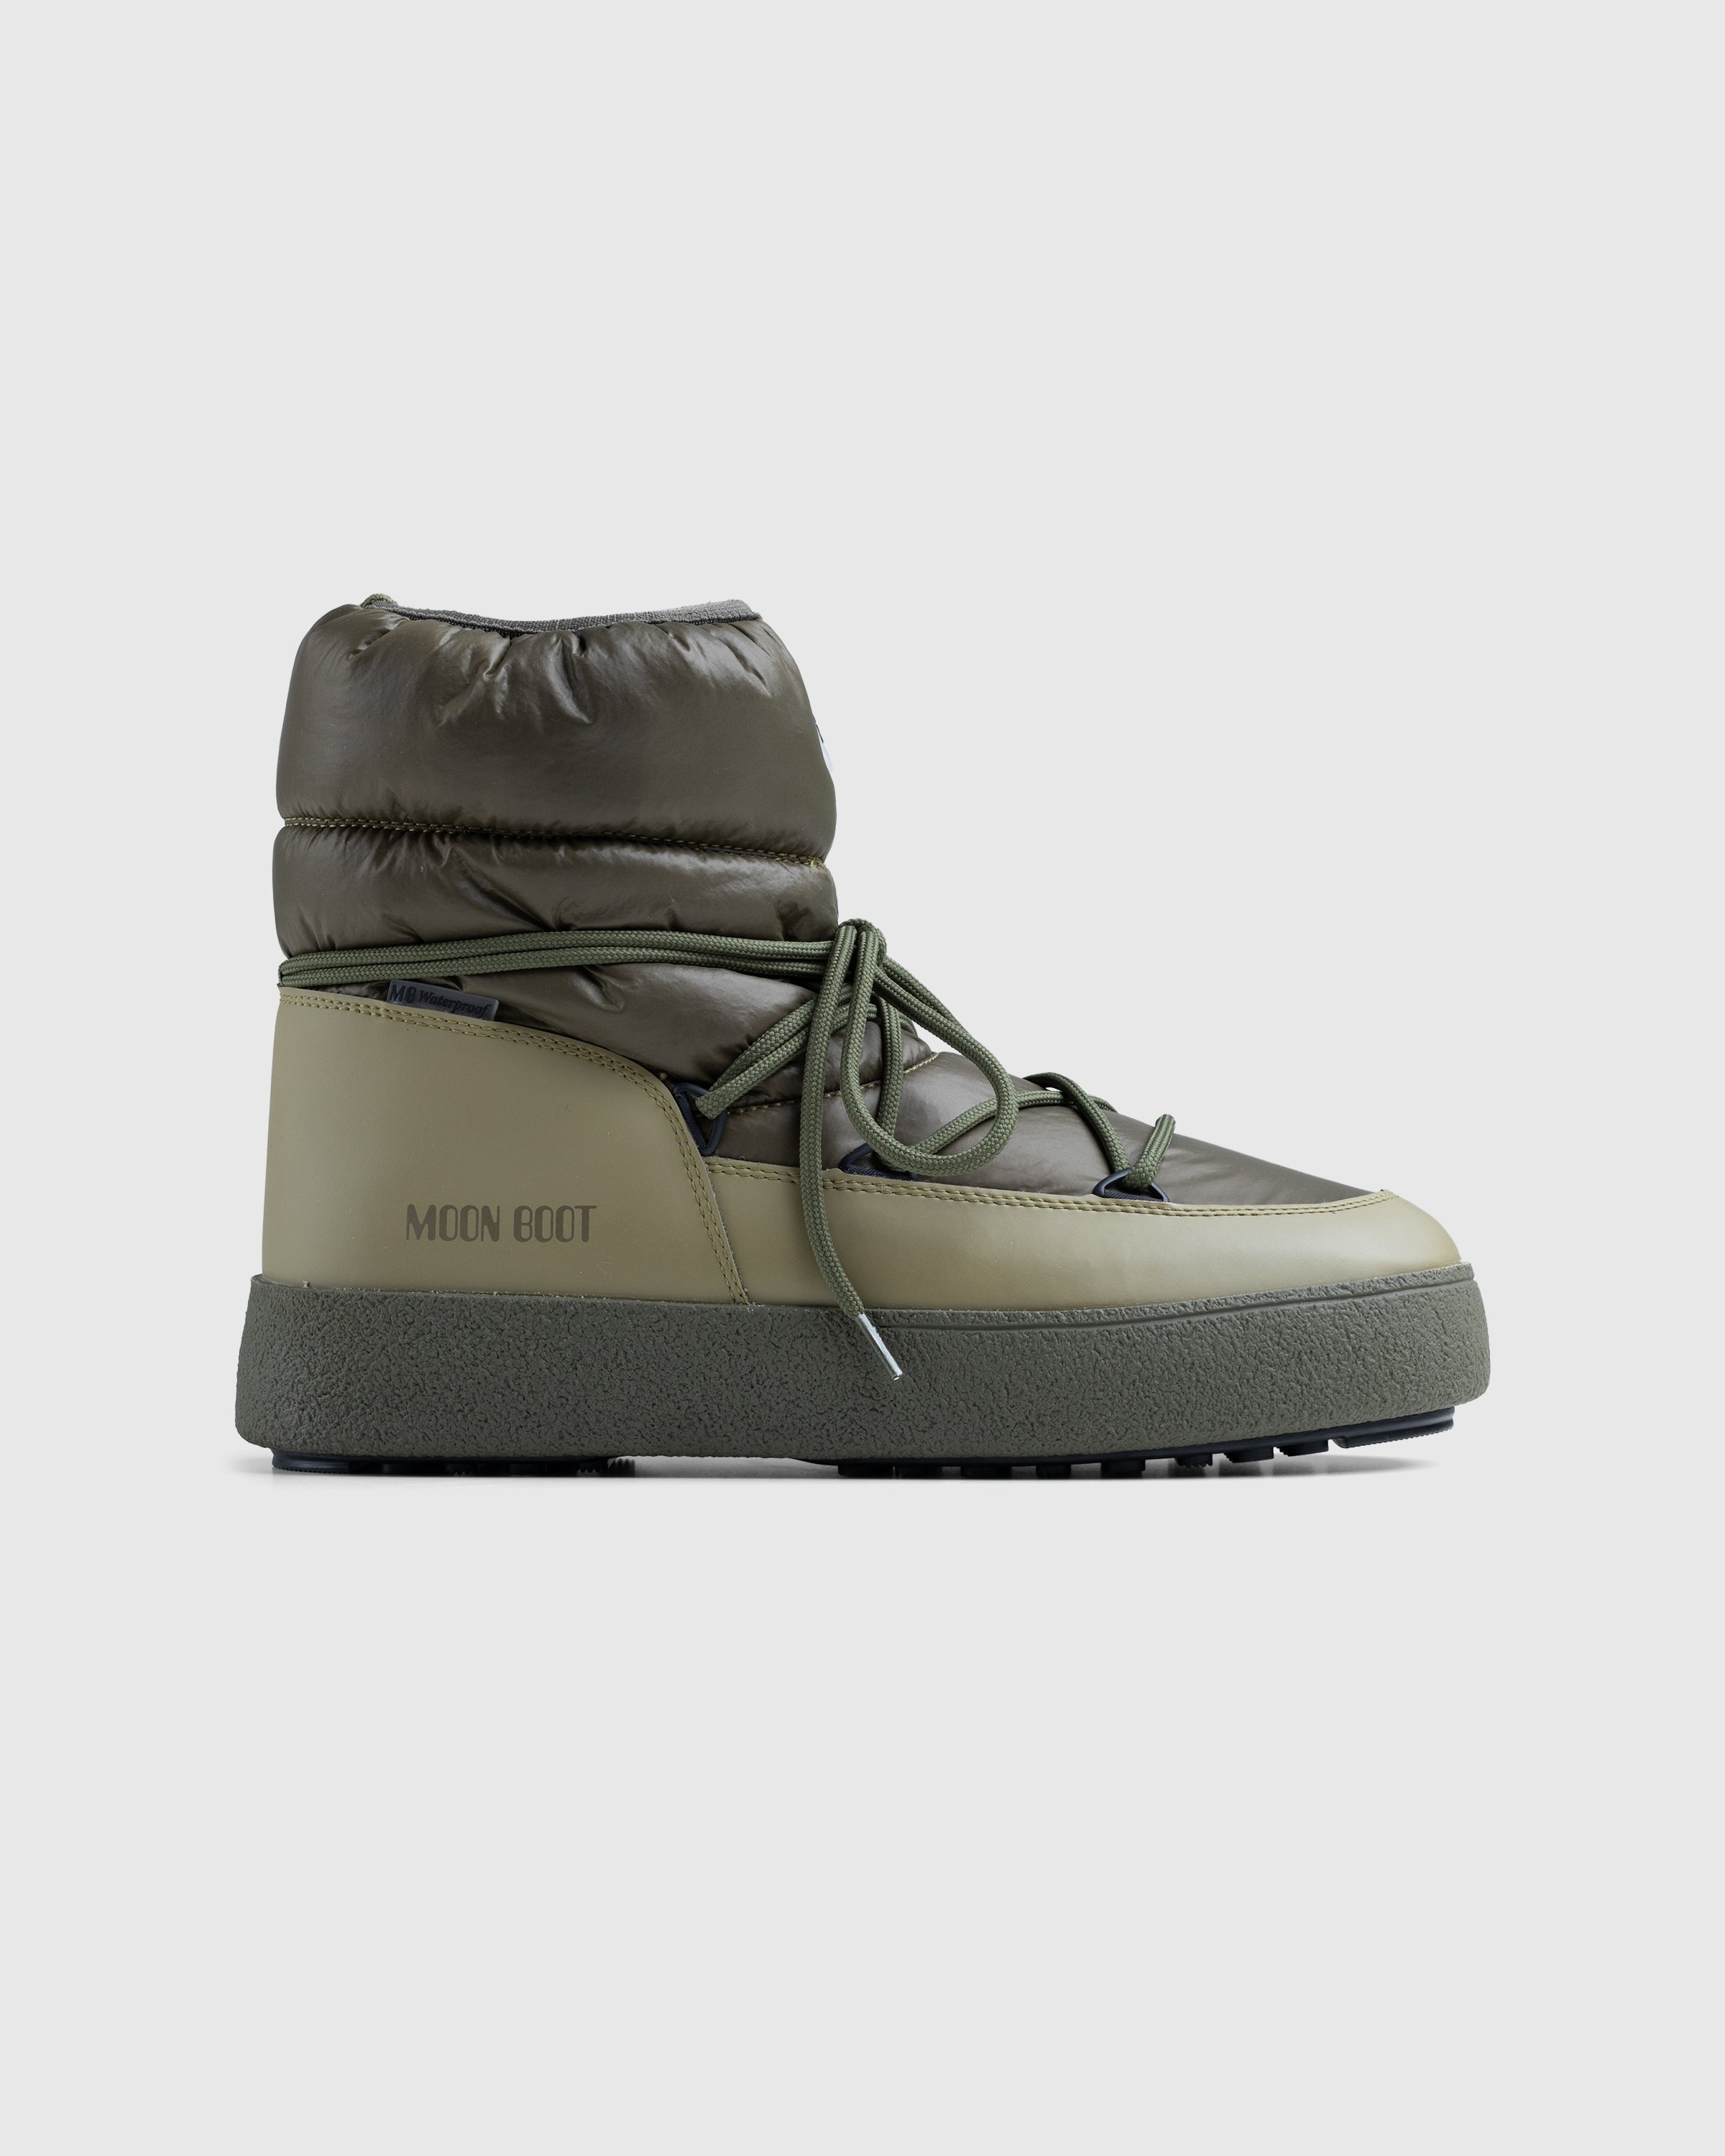 Moon Boot - Mtrack Low Khaki Nylon Boots - Footwear - Green - Image 1